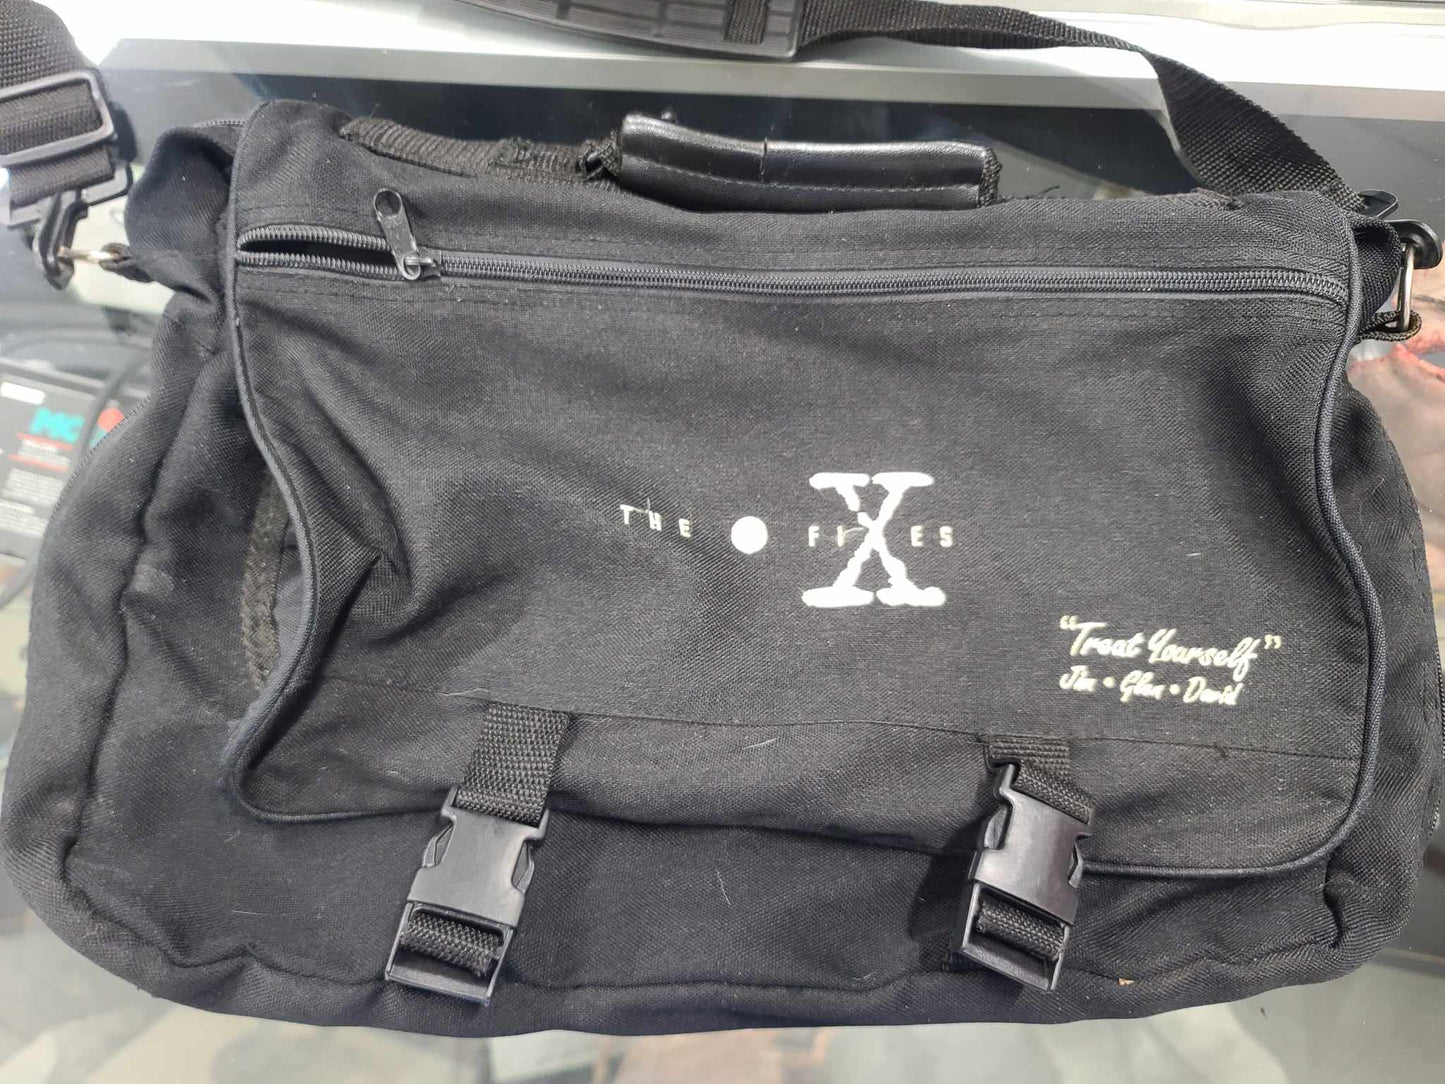 The X-Files Messenger Bag Crew Gift